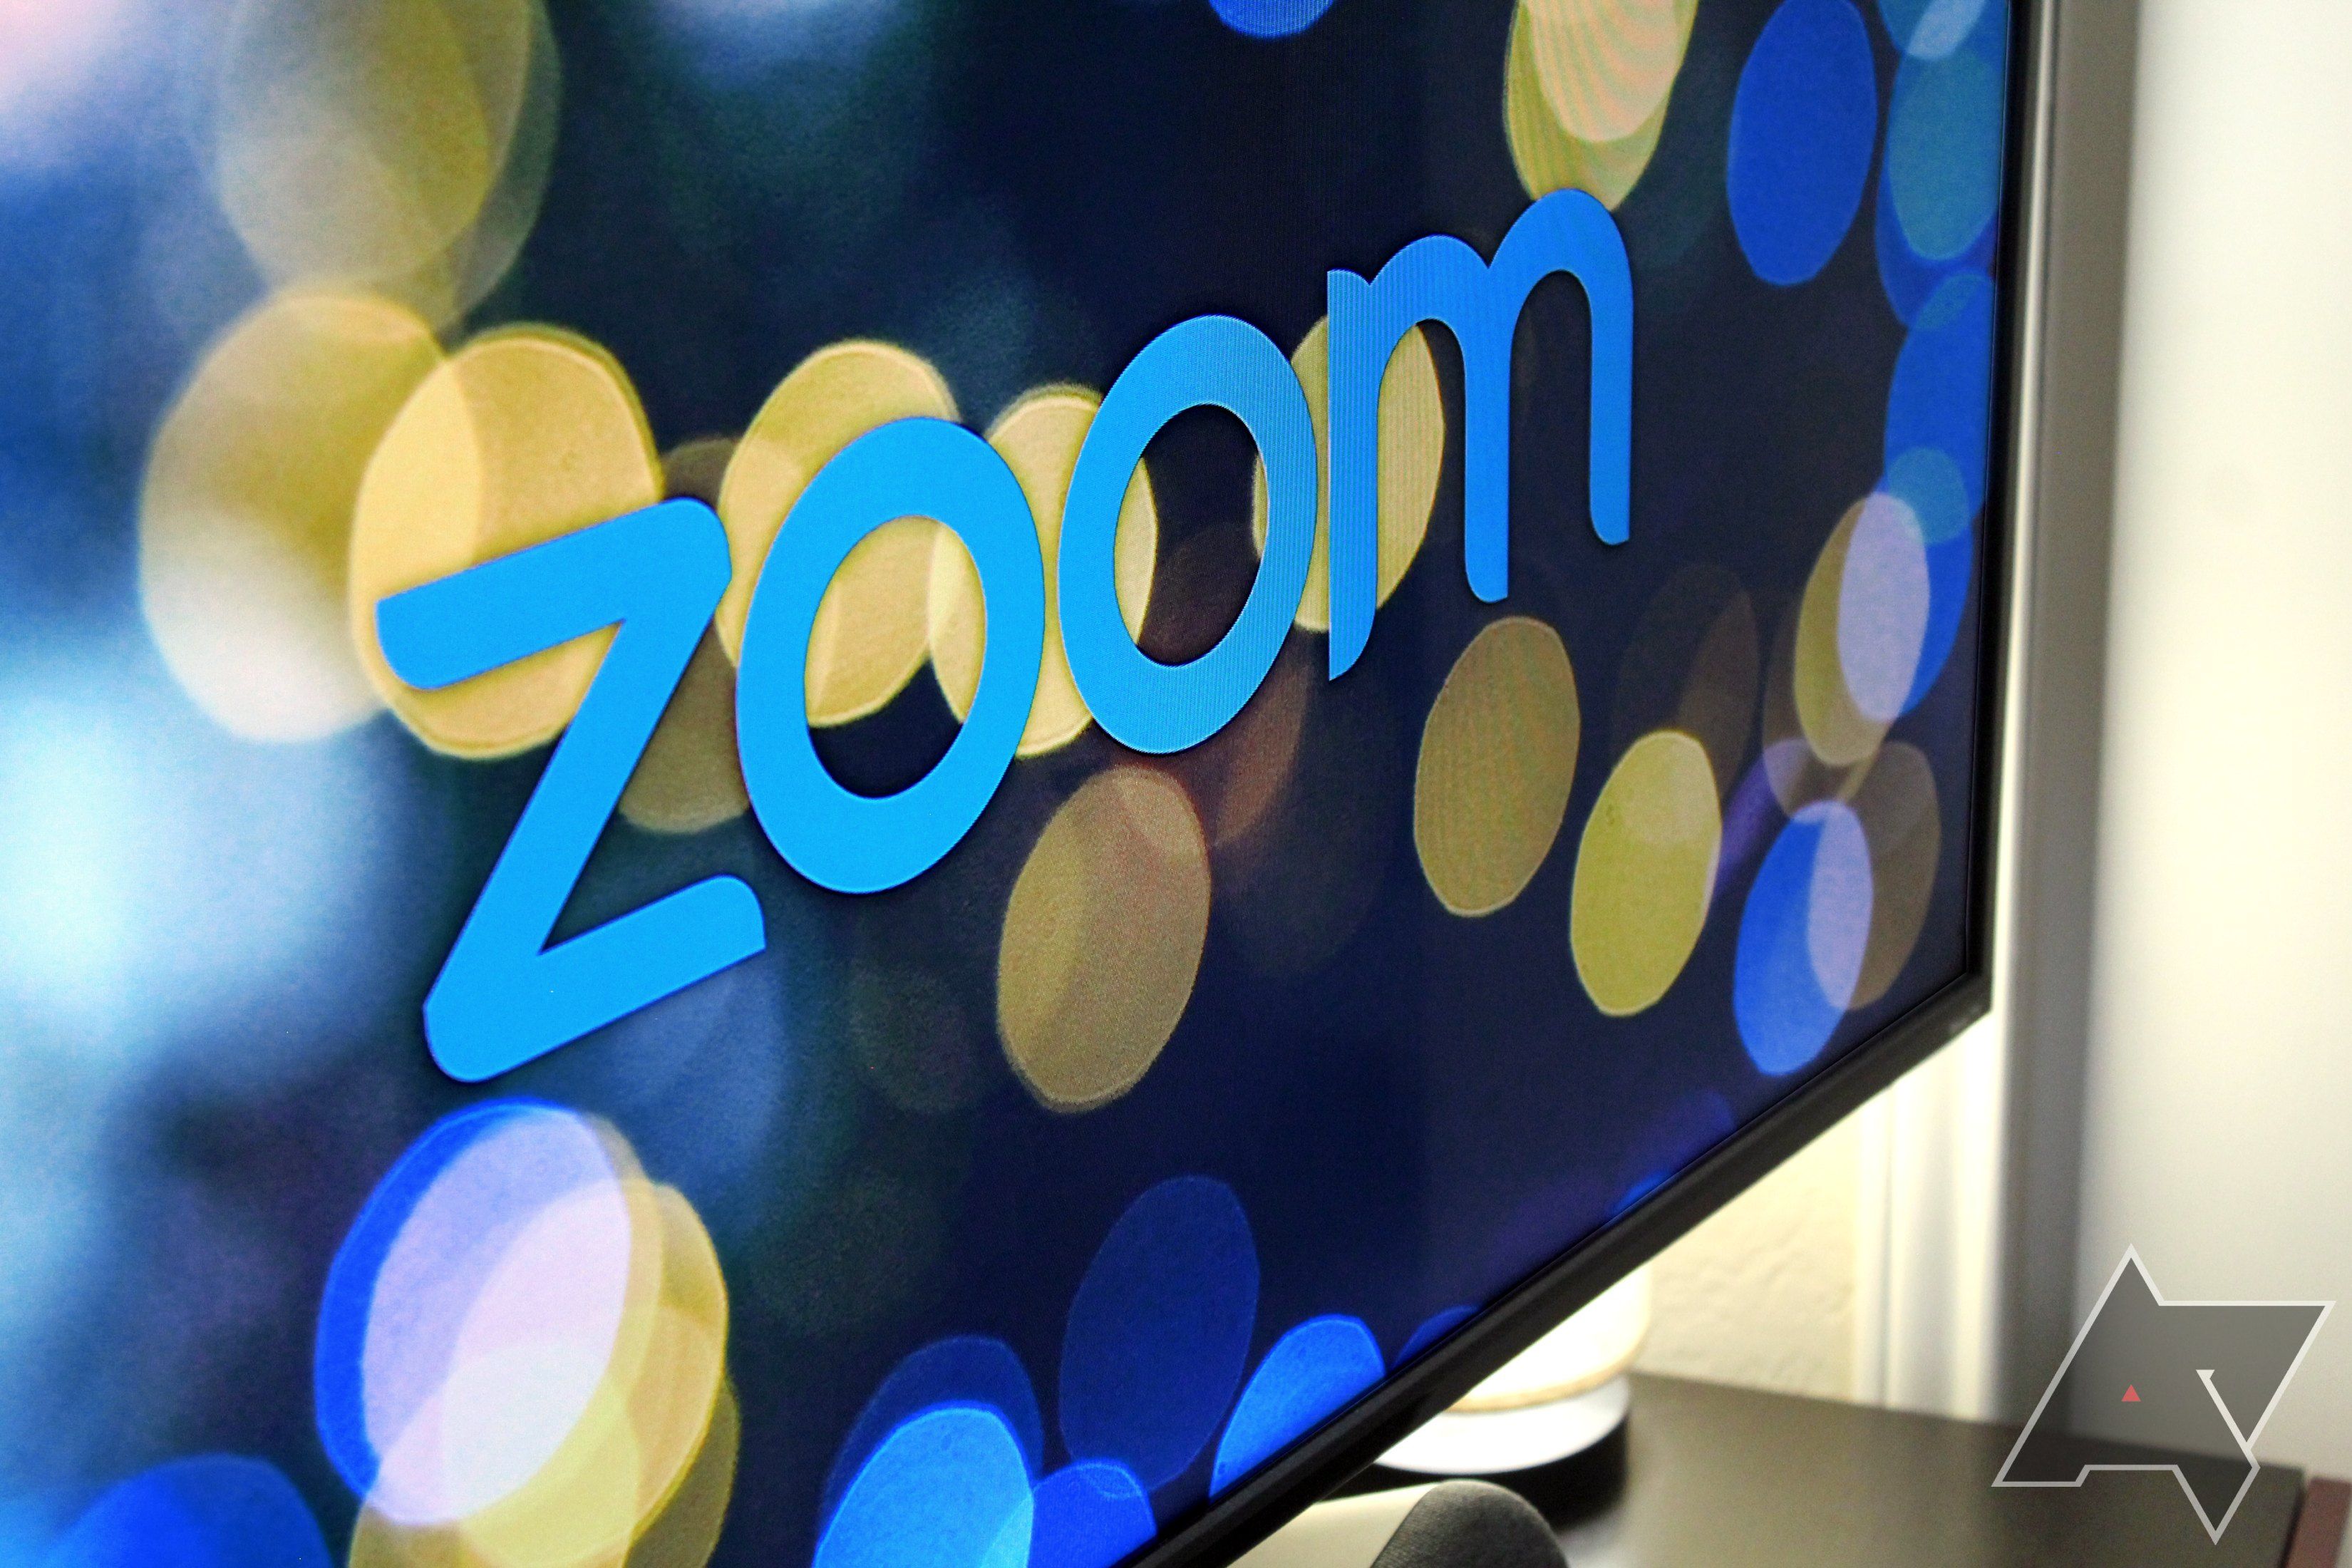 zoom logo on tv side angle